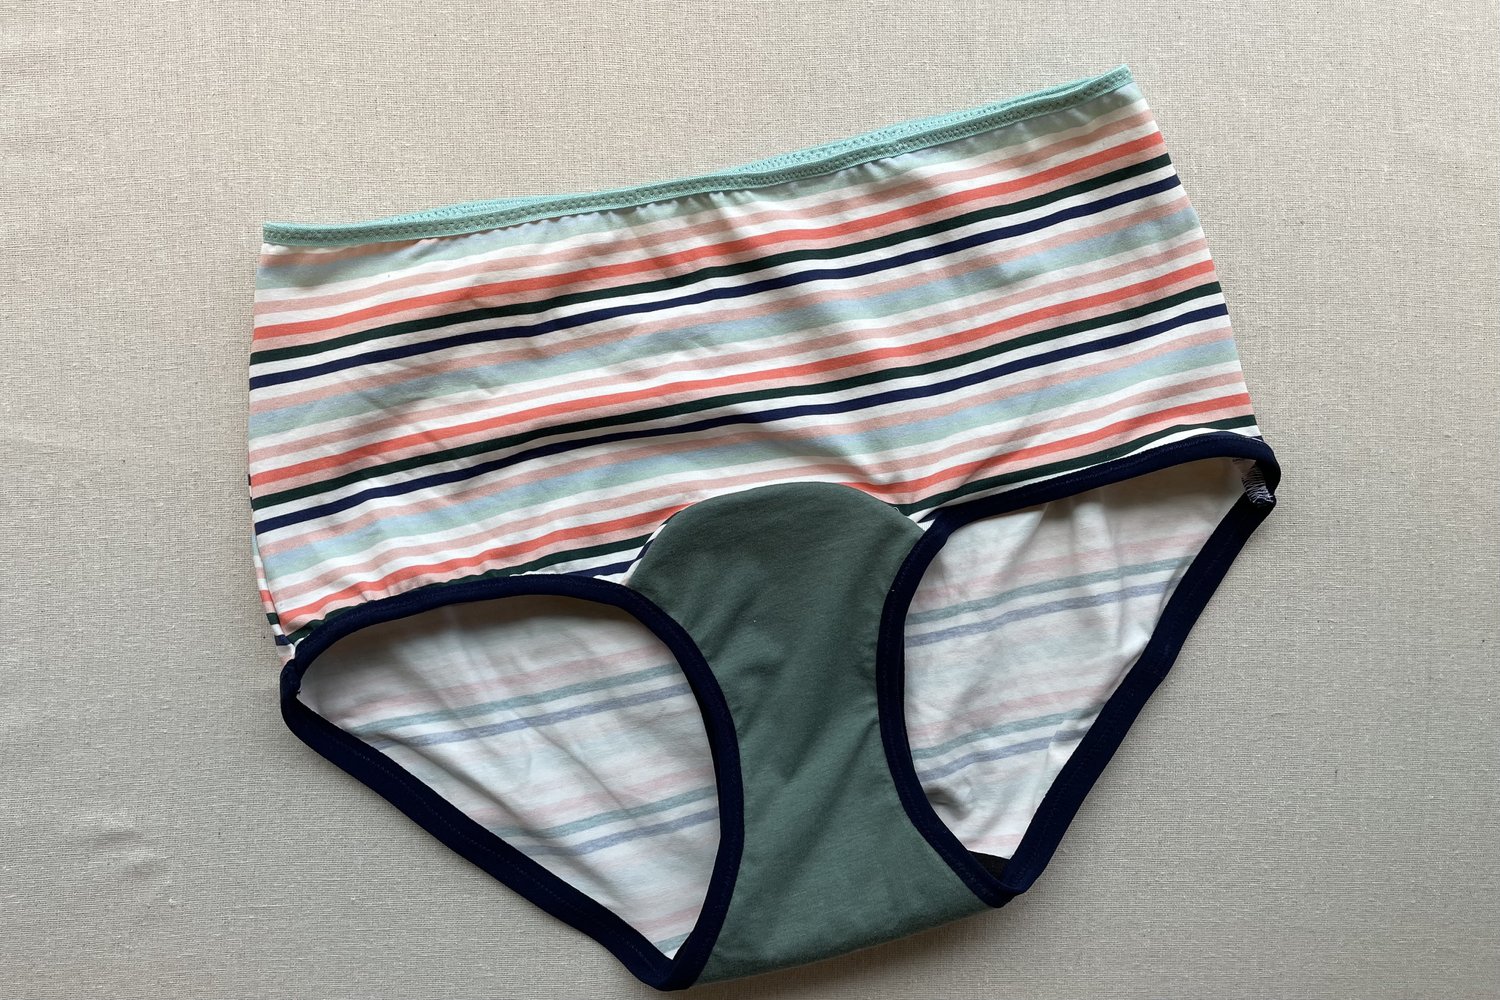 dorothy bernard recommends panties at work tumblr pic